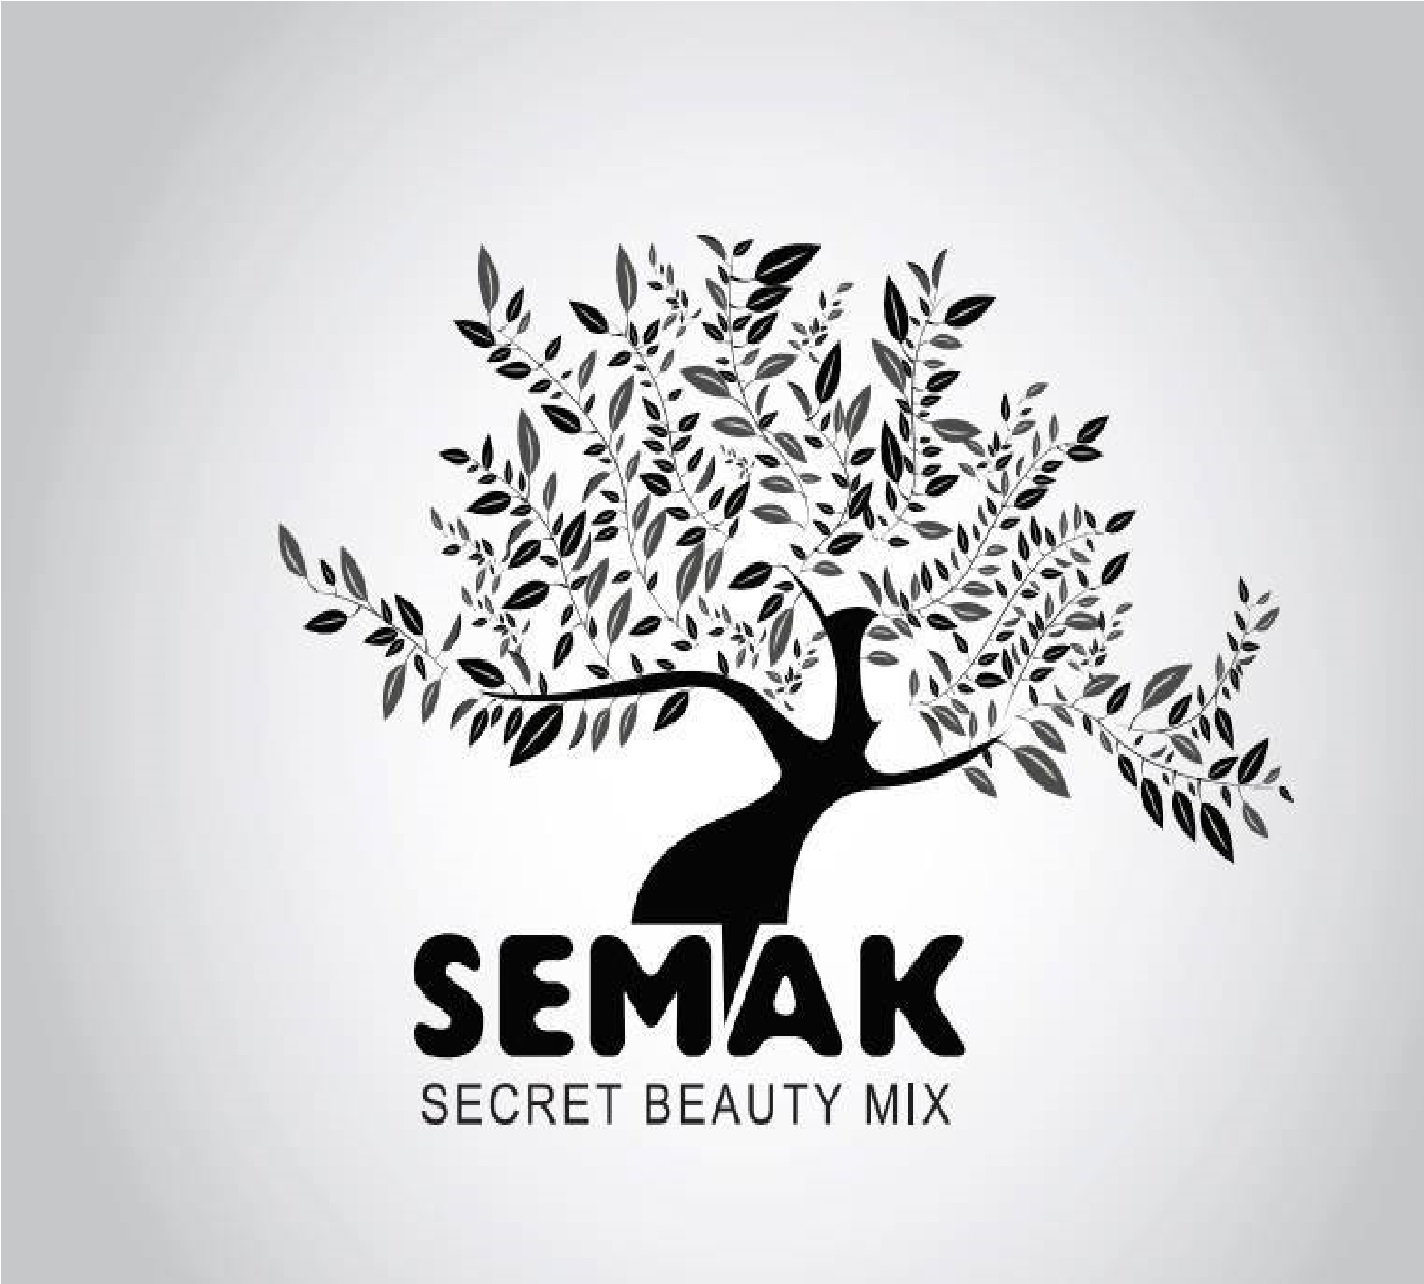 SEMAK for Cosmetics